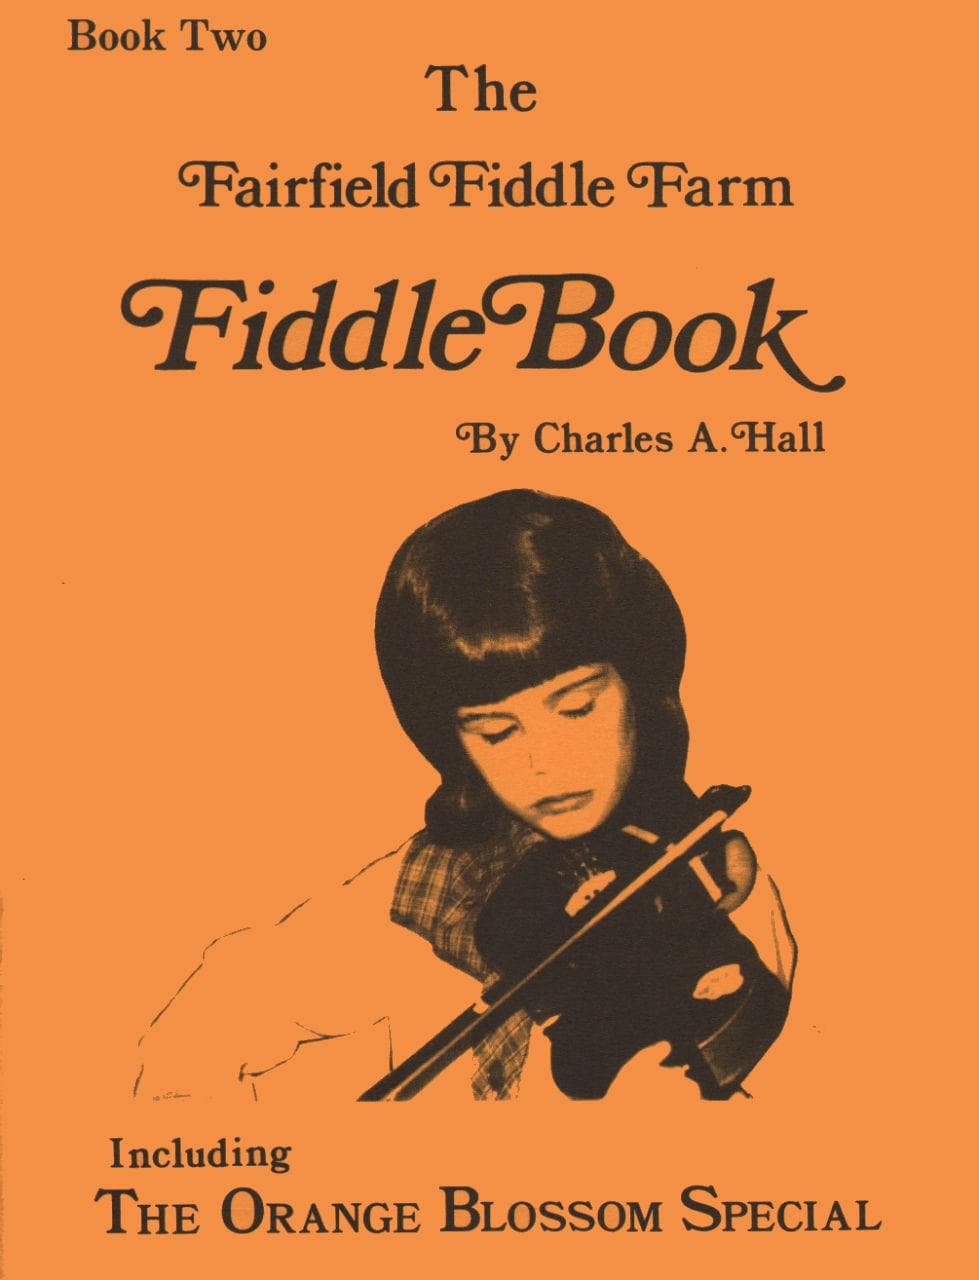 Hall, Charles A - The Fairfield Fiddle Farm: Fiddle Book 2 - Violin and Piano - Fairfield Fiddle Farm Publishing